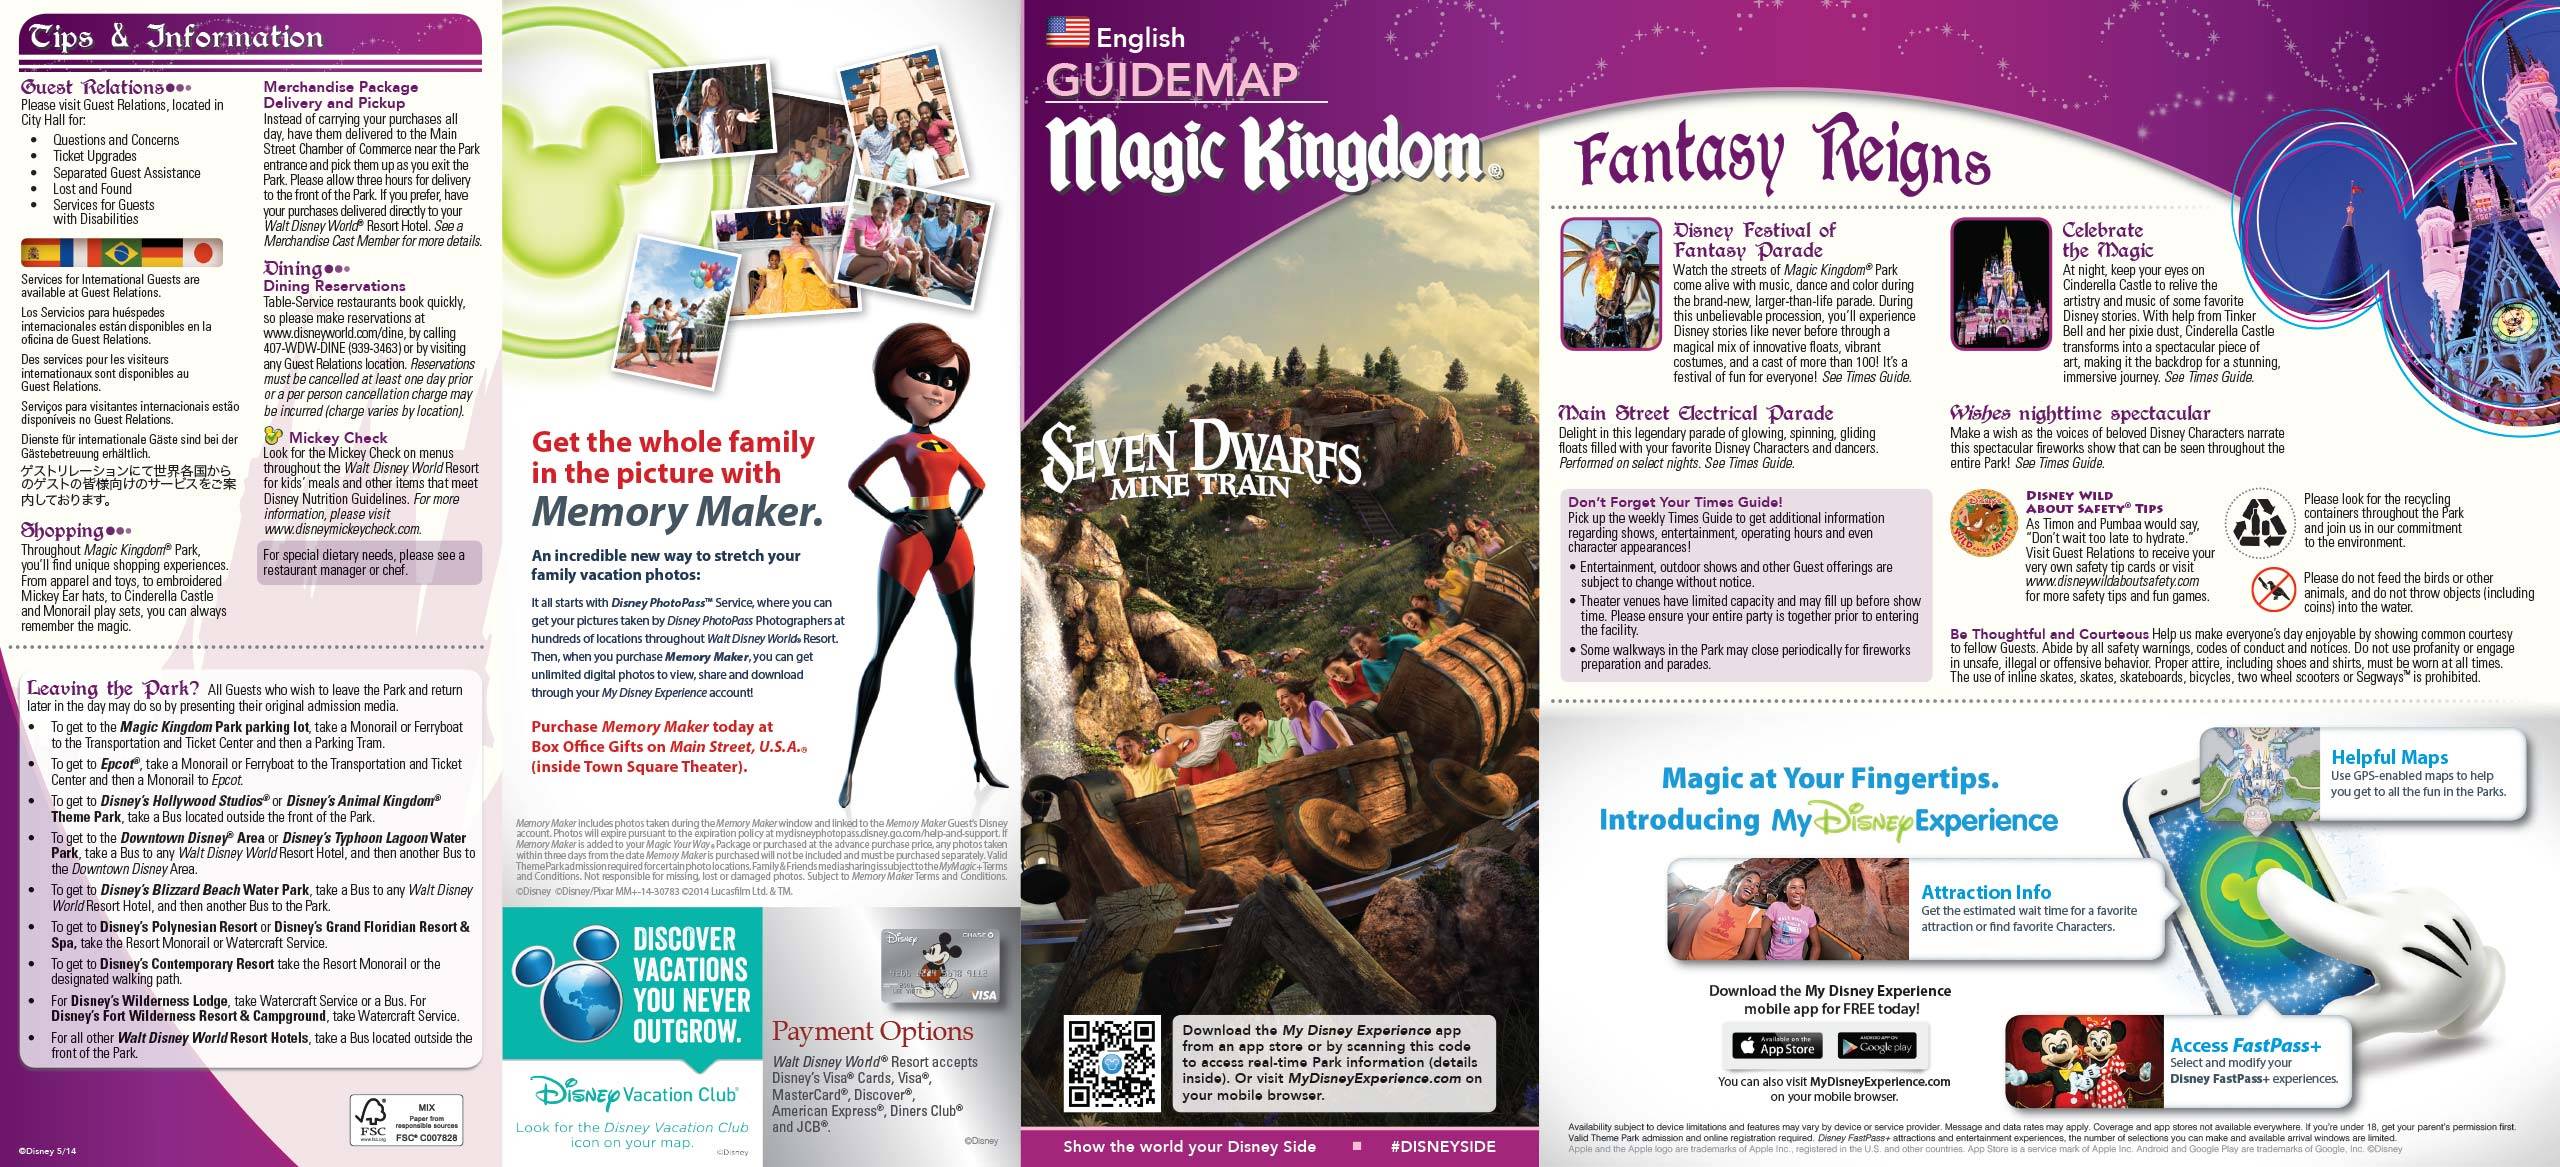 New Magic Kingdom guide map featuring Seven Dwarfs Mine Train - front cover